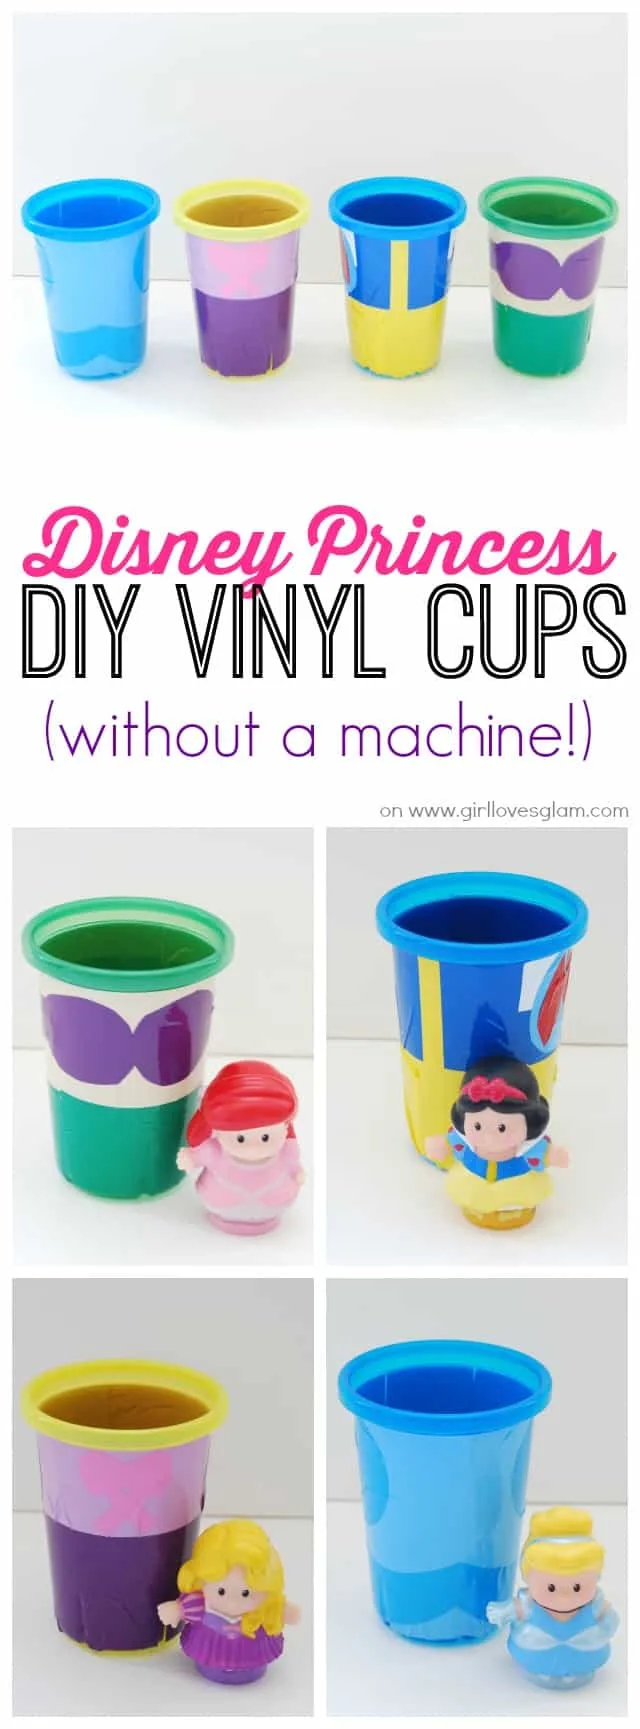 https://www.girllovesglam.com/wp-content/uploads/2015/04/Disney-Princess-DIY-Vinyl-Cups.jpg.webp